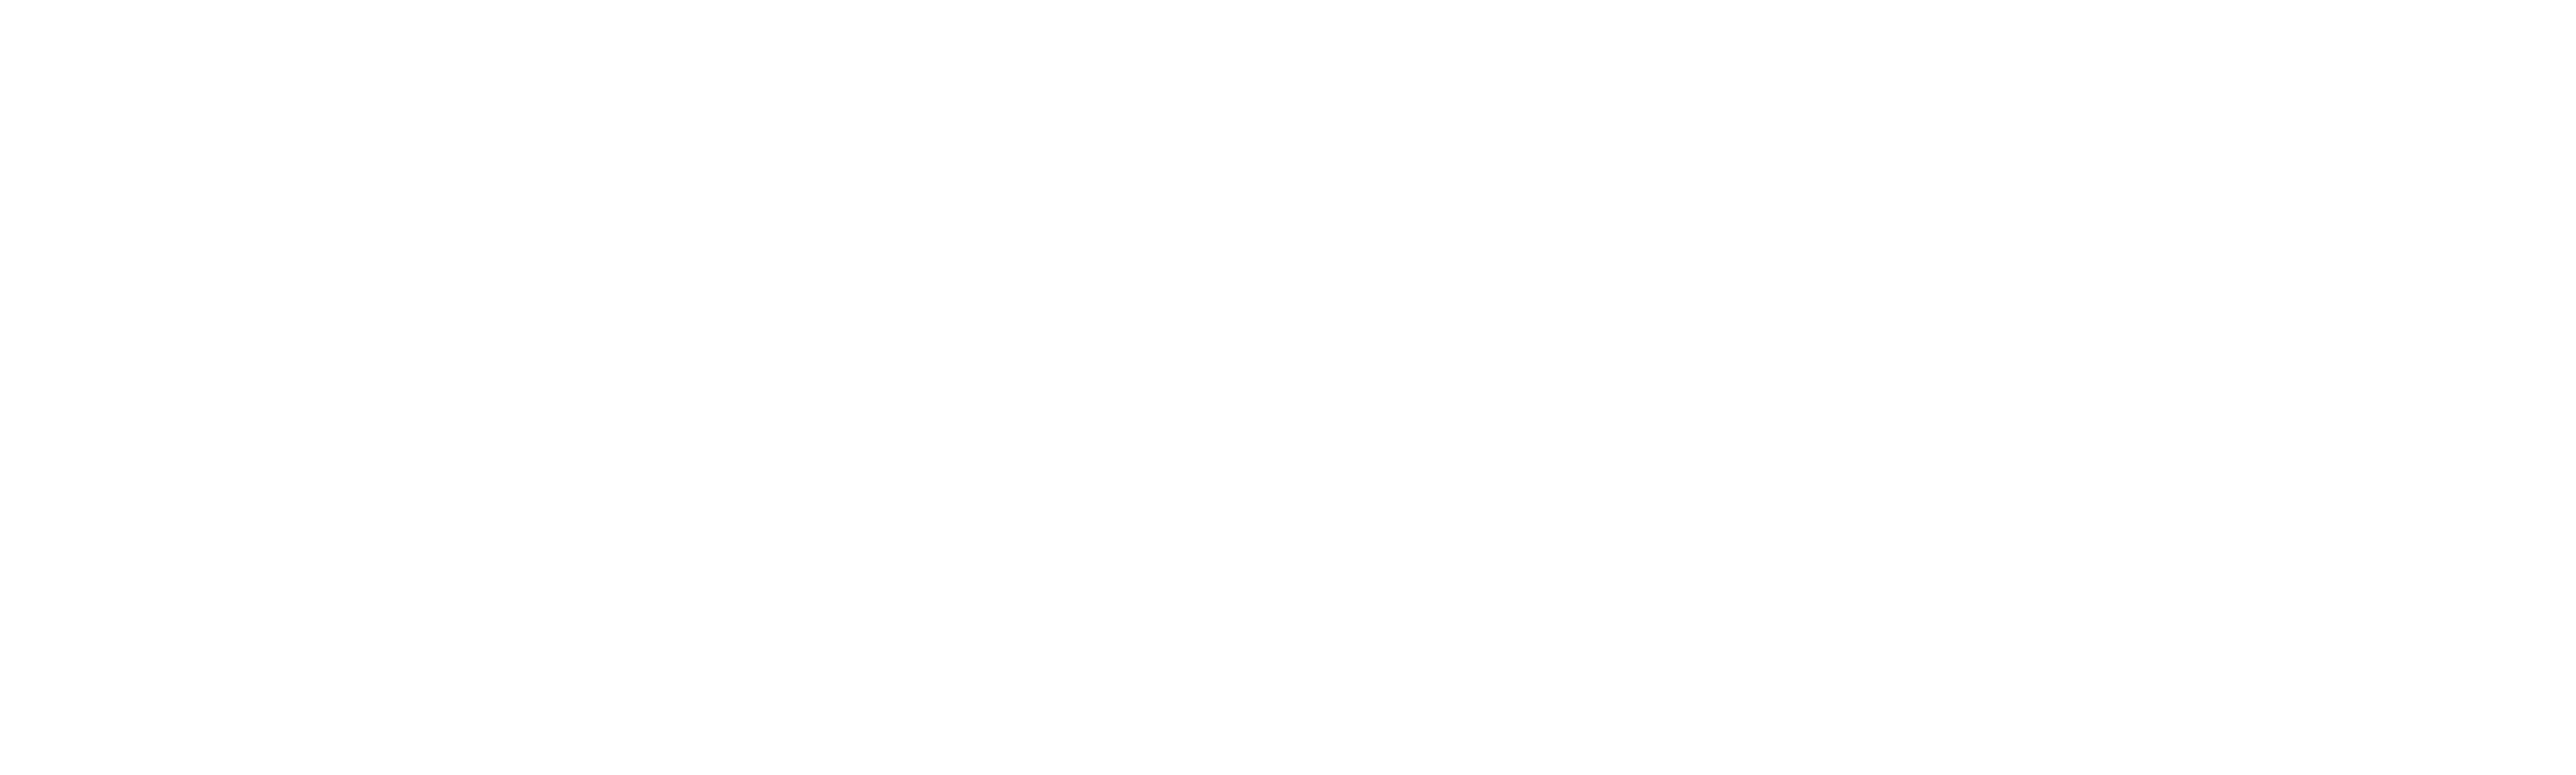 My Feet Are Killing Me: Season 4, Episode 3